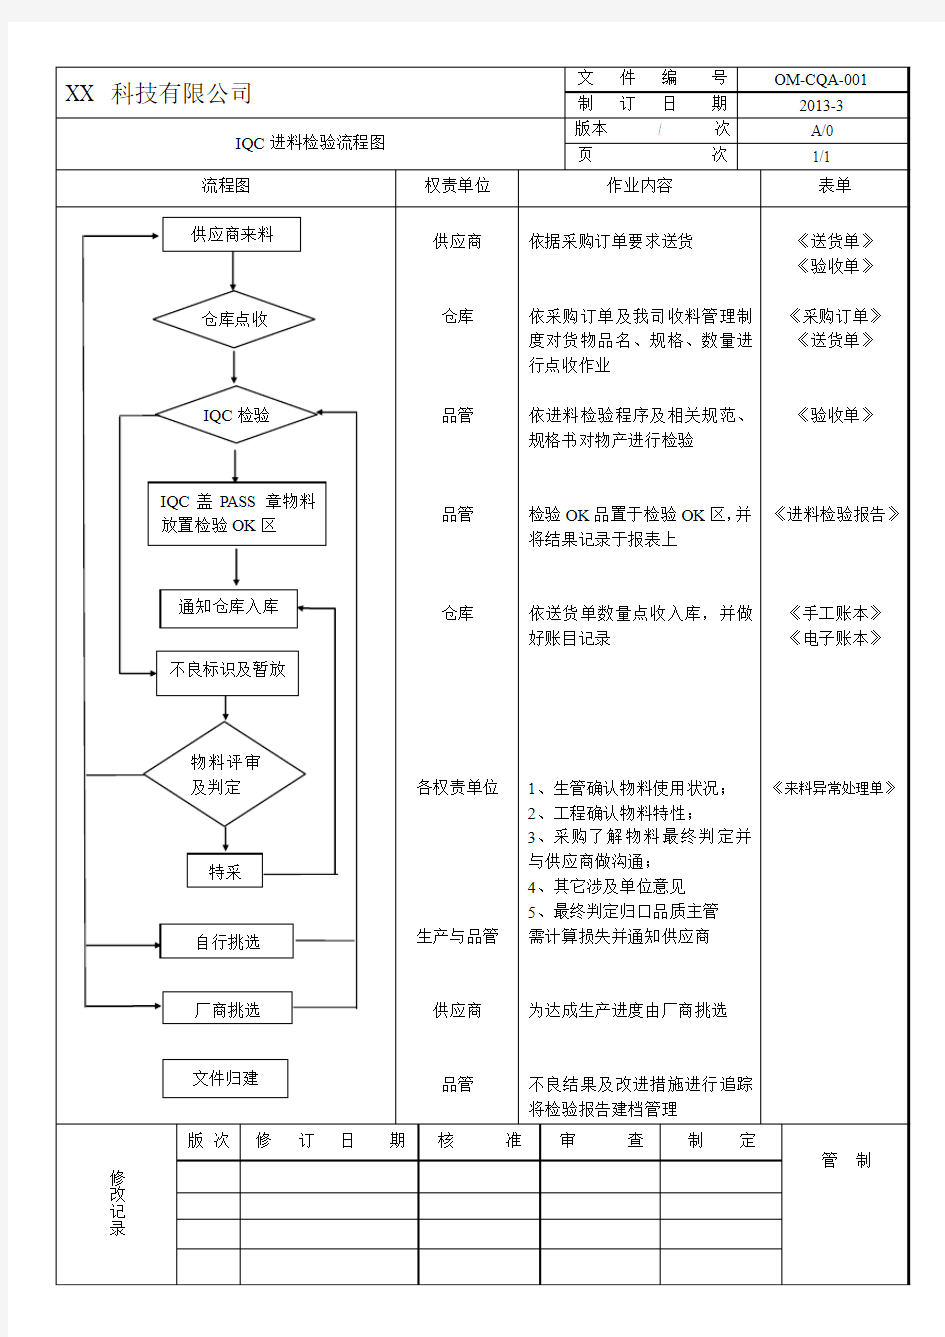 IQC进料检验流程图-2013.3-a